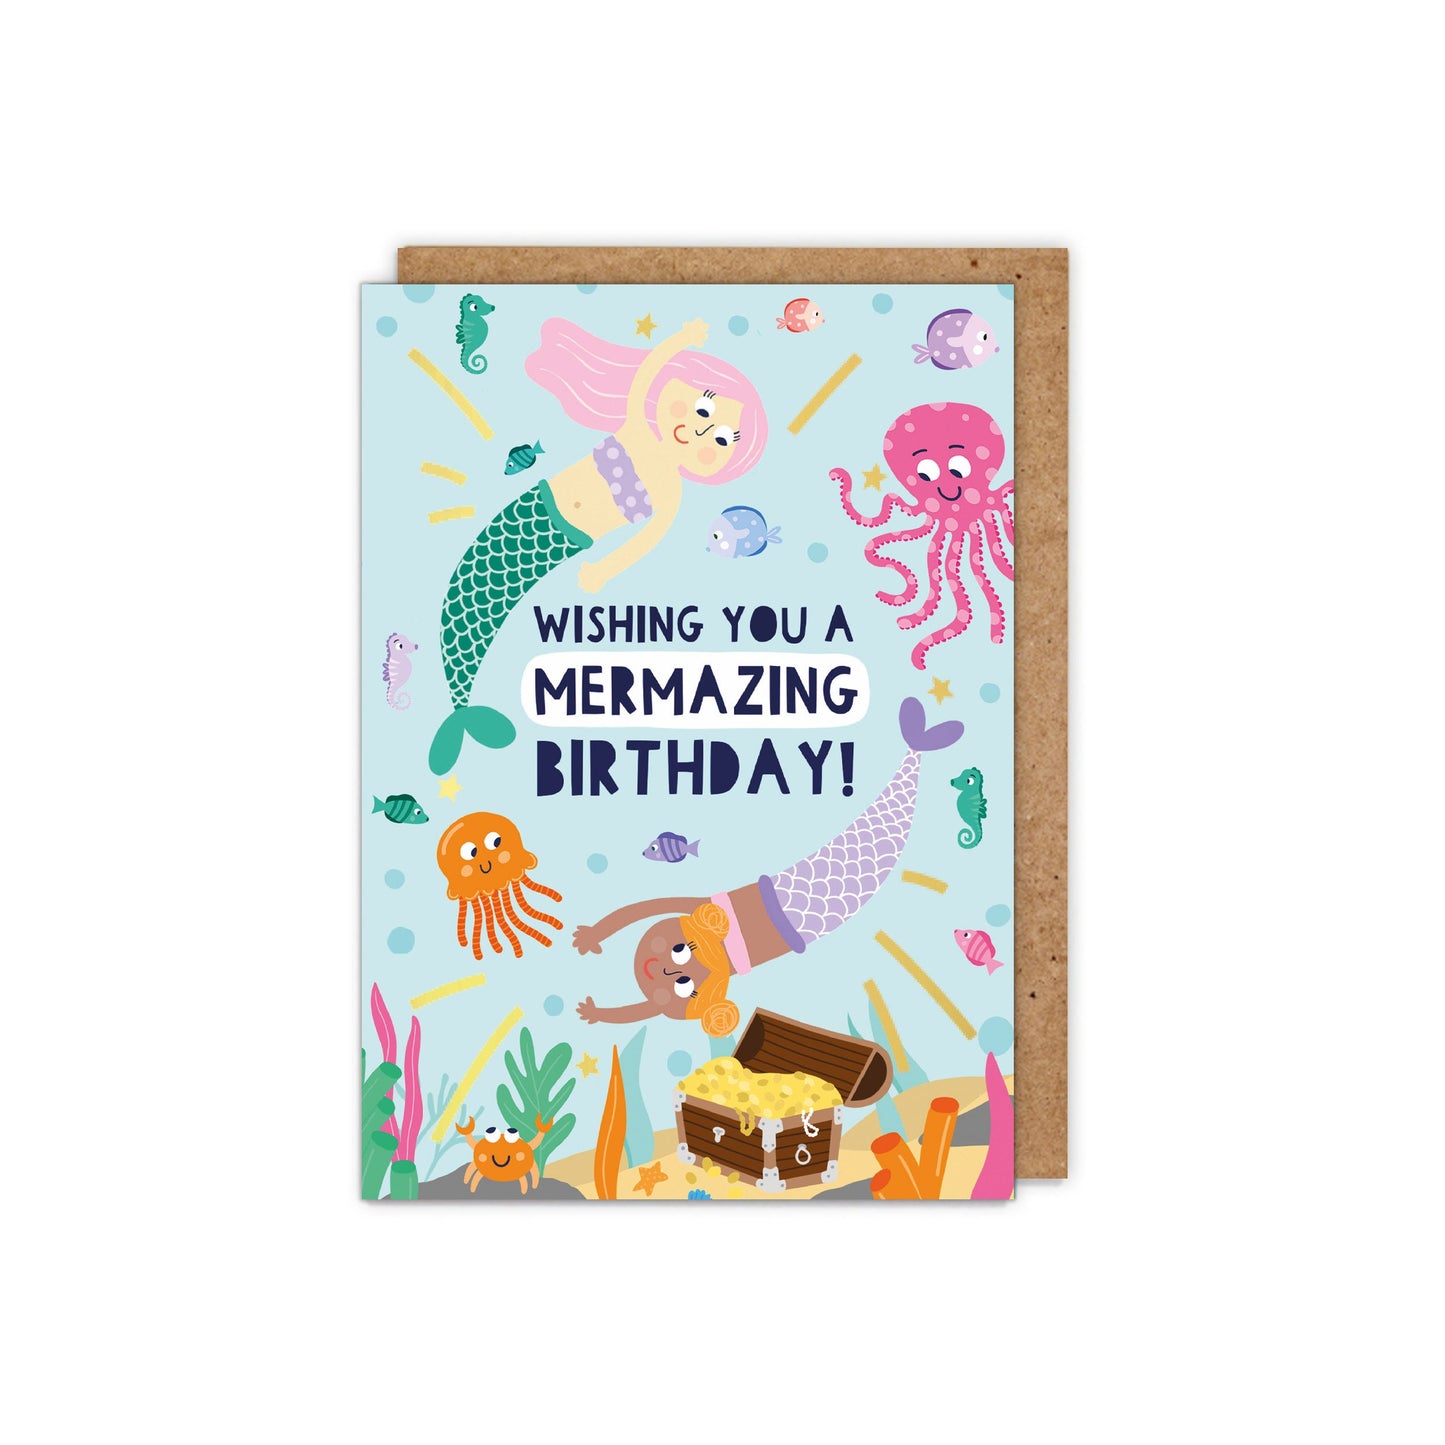 Wishing you a Mermazing Birthday' Gold Foiled Children's Birthday Card